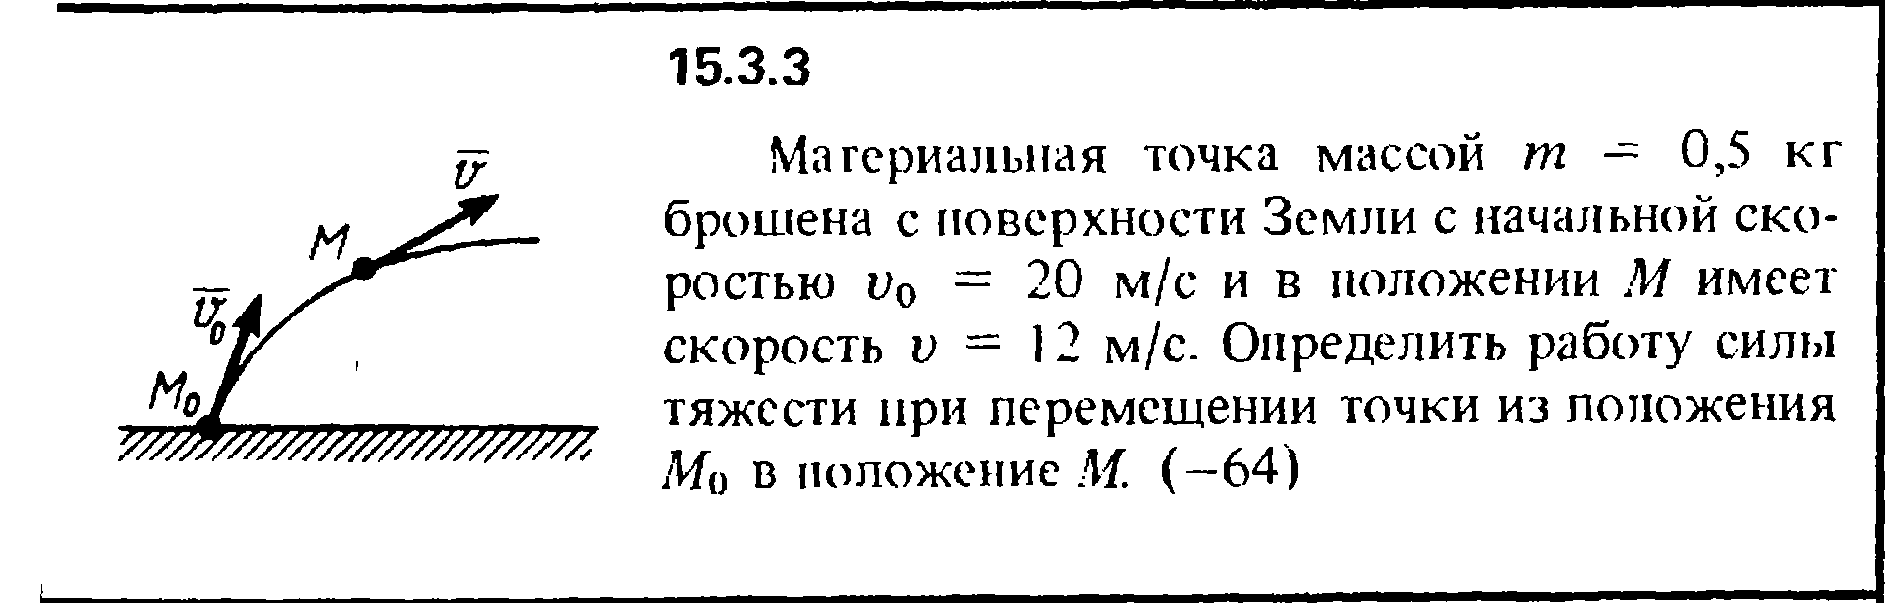 Решение задачи 15.3.3 из сборника Кепе О.Е. 1989 года